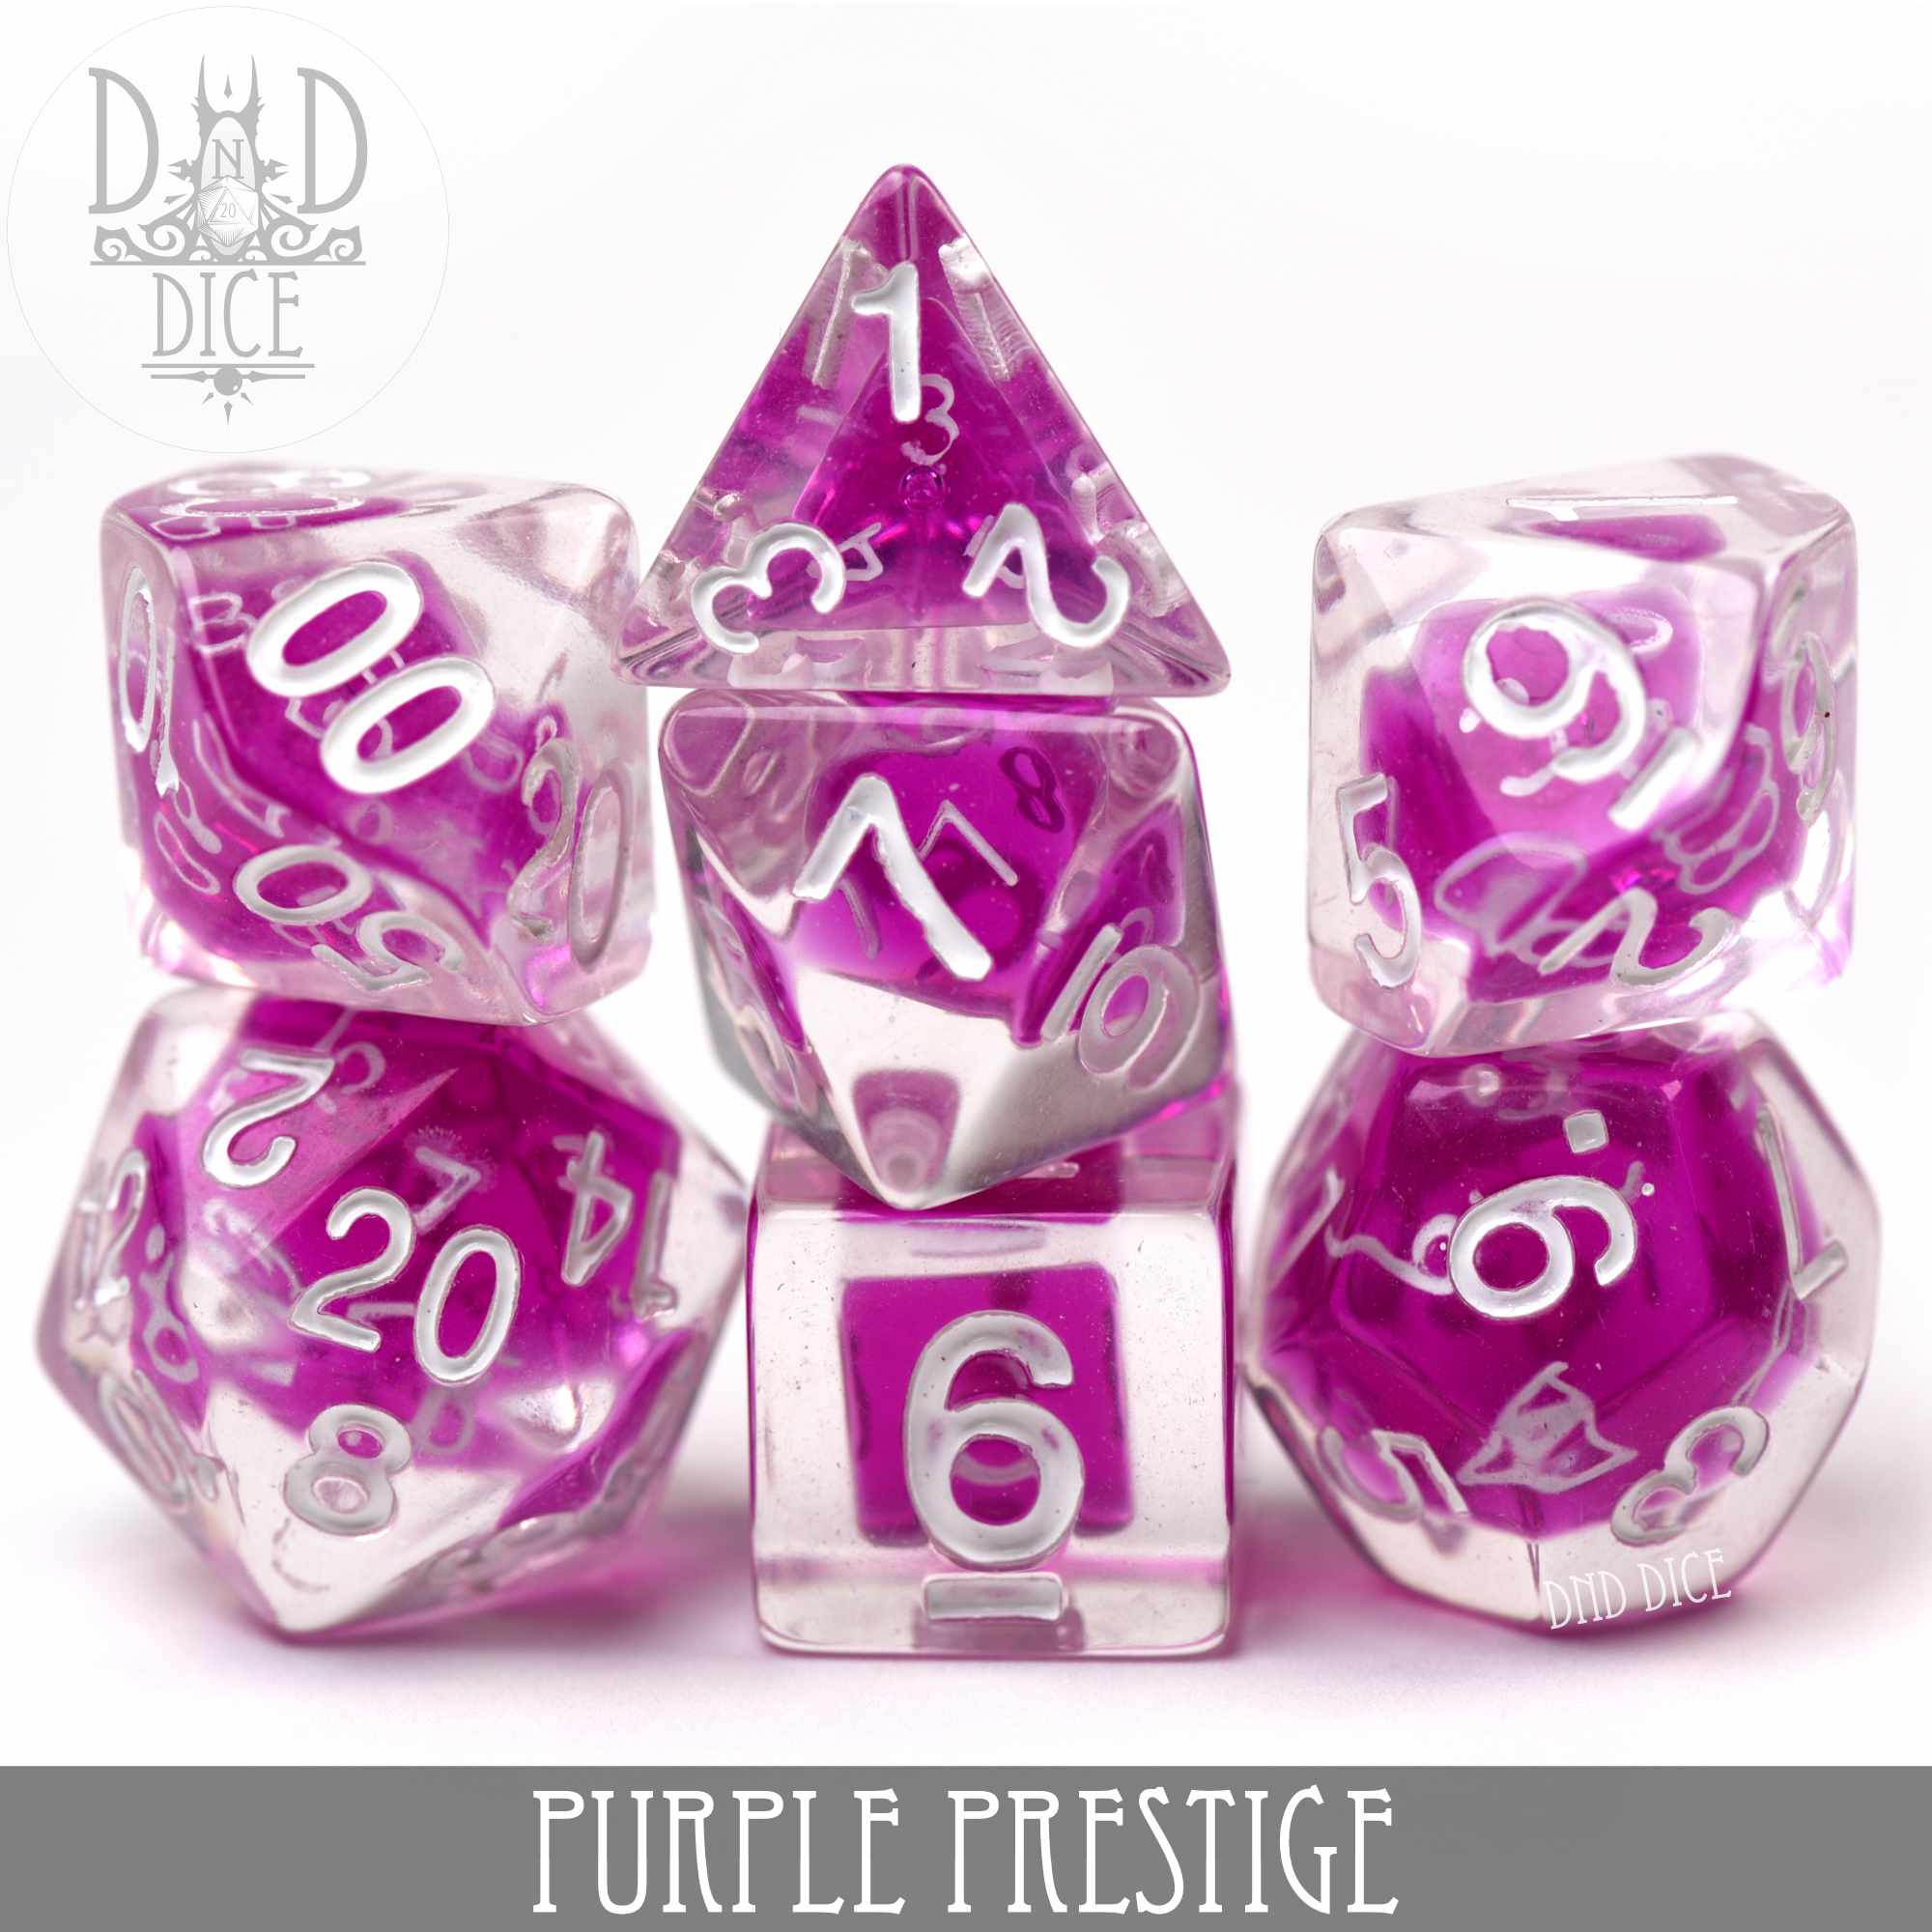 Purple Prestige Dice Set